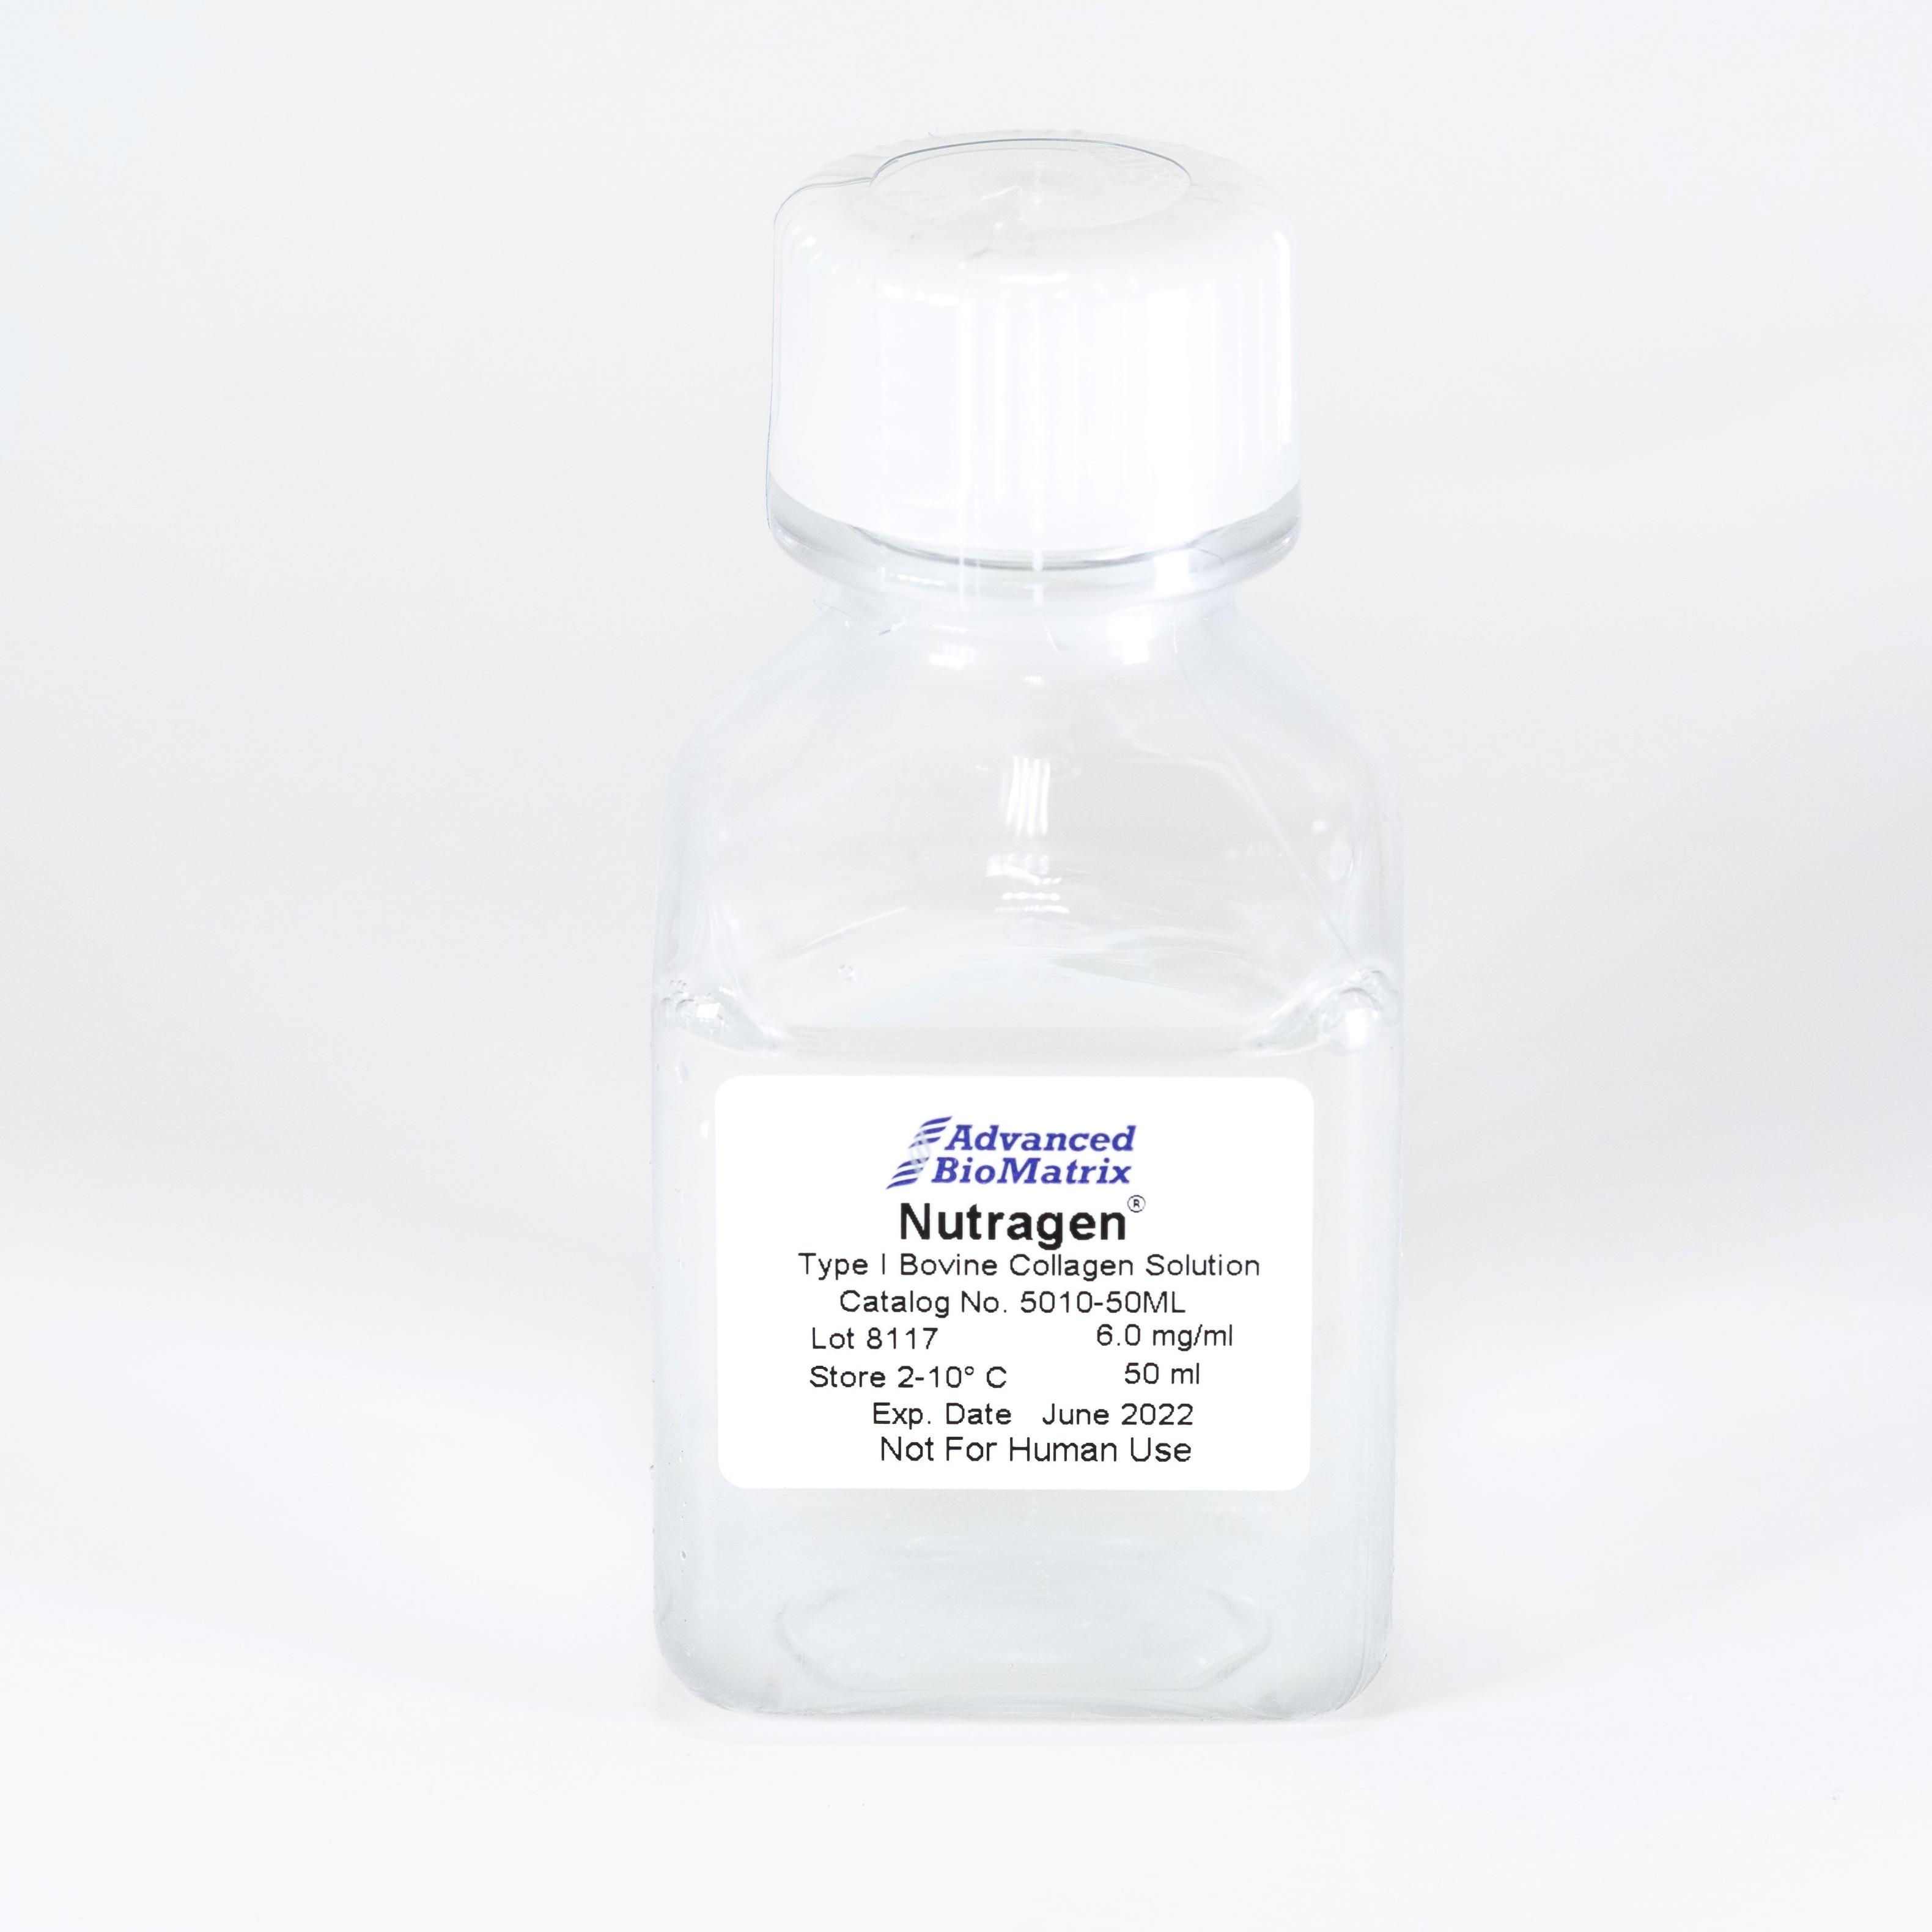 Nutragen type I collagen 6 mg/ml from Advanced BioMatrix